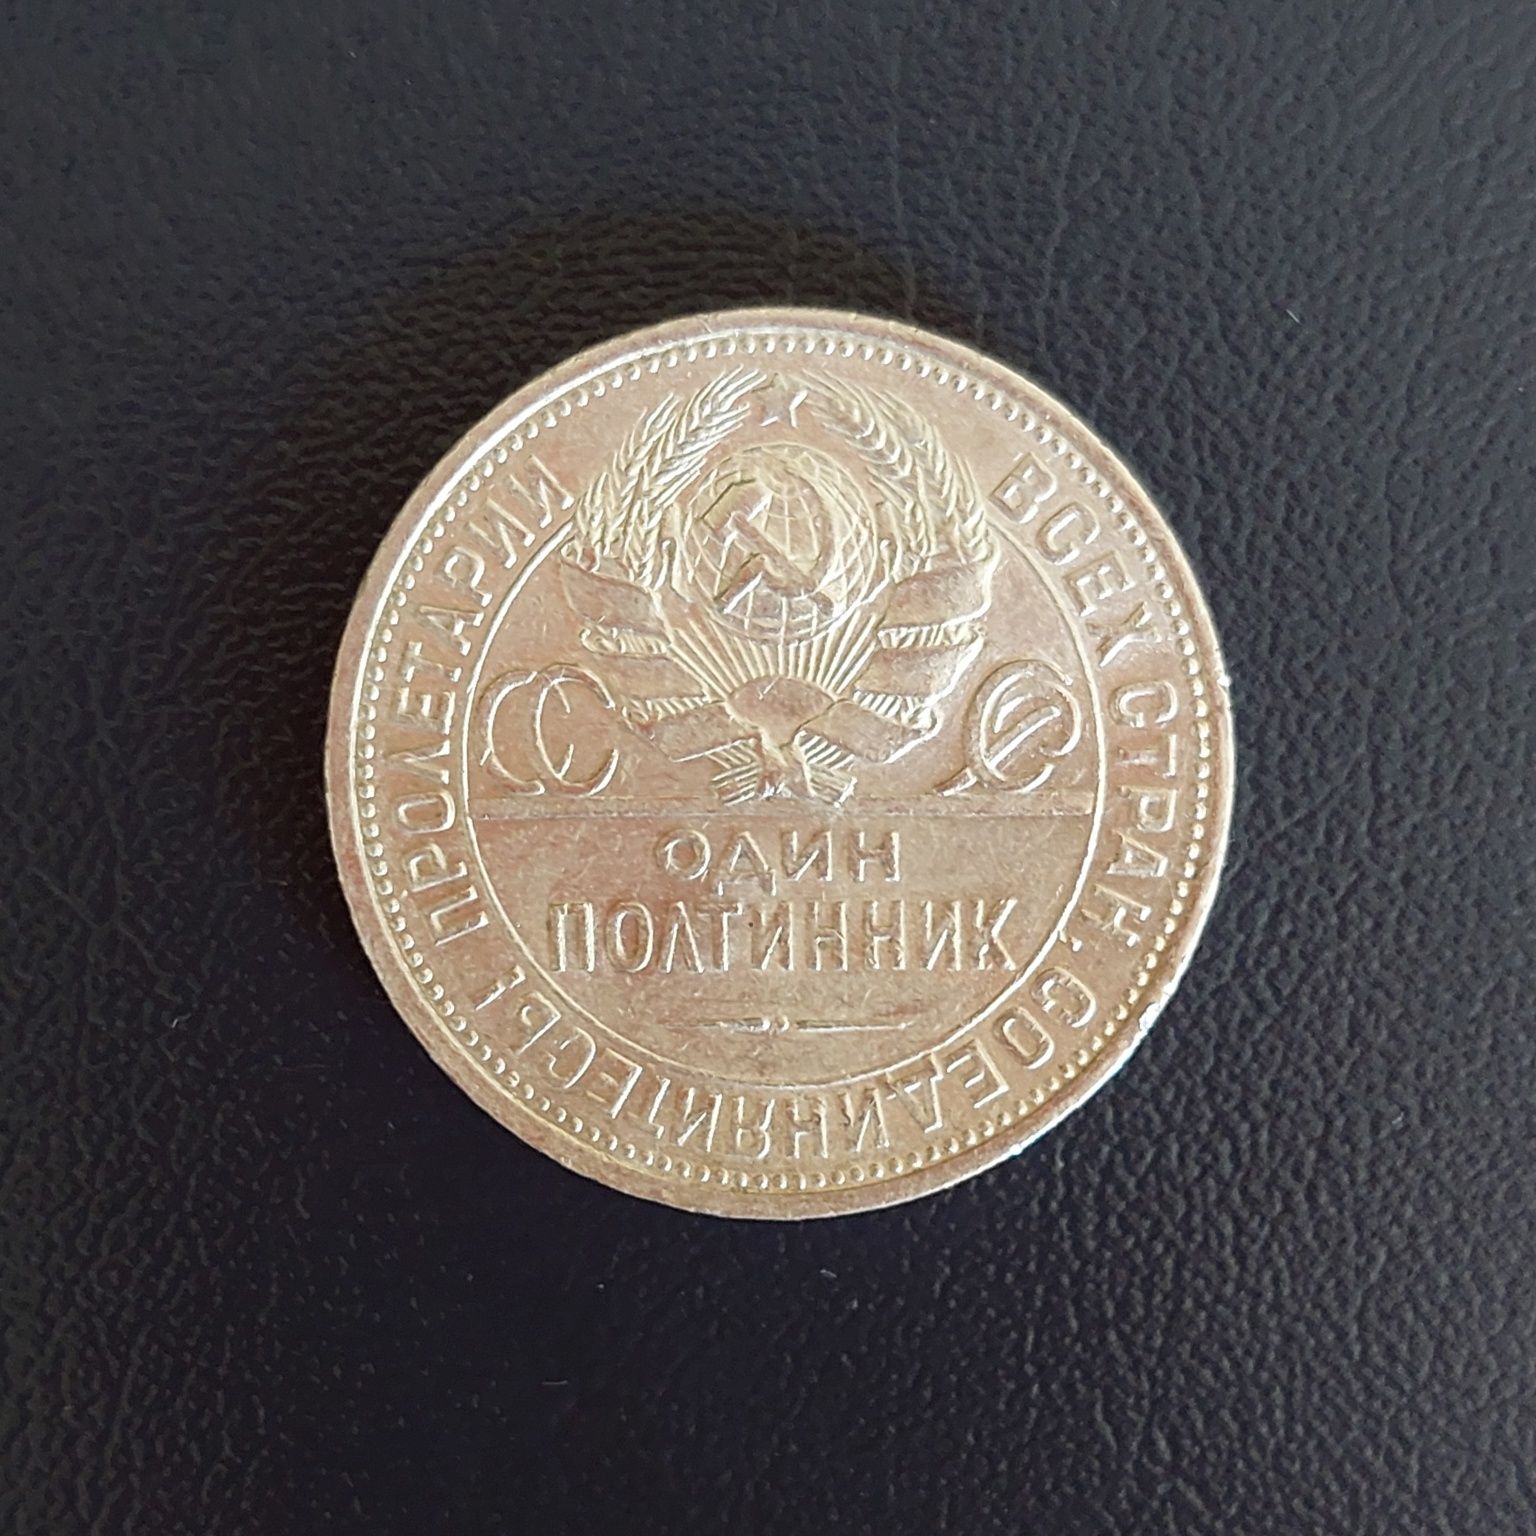 50 копеек 1925 года серебро